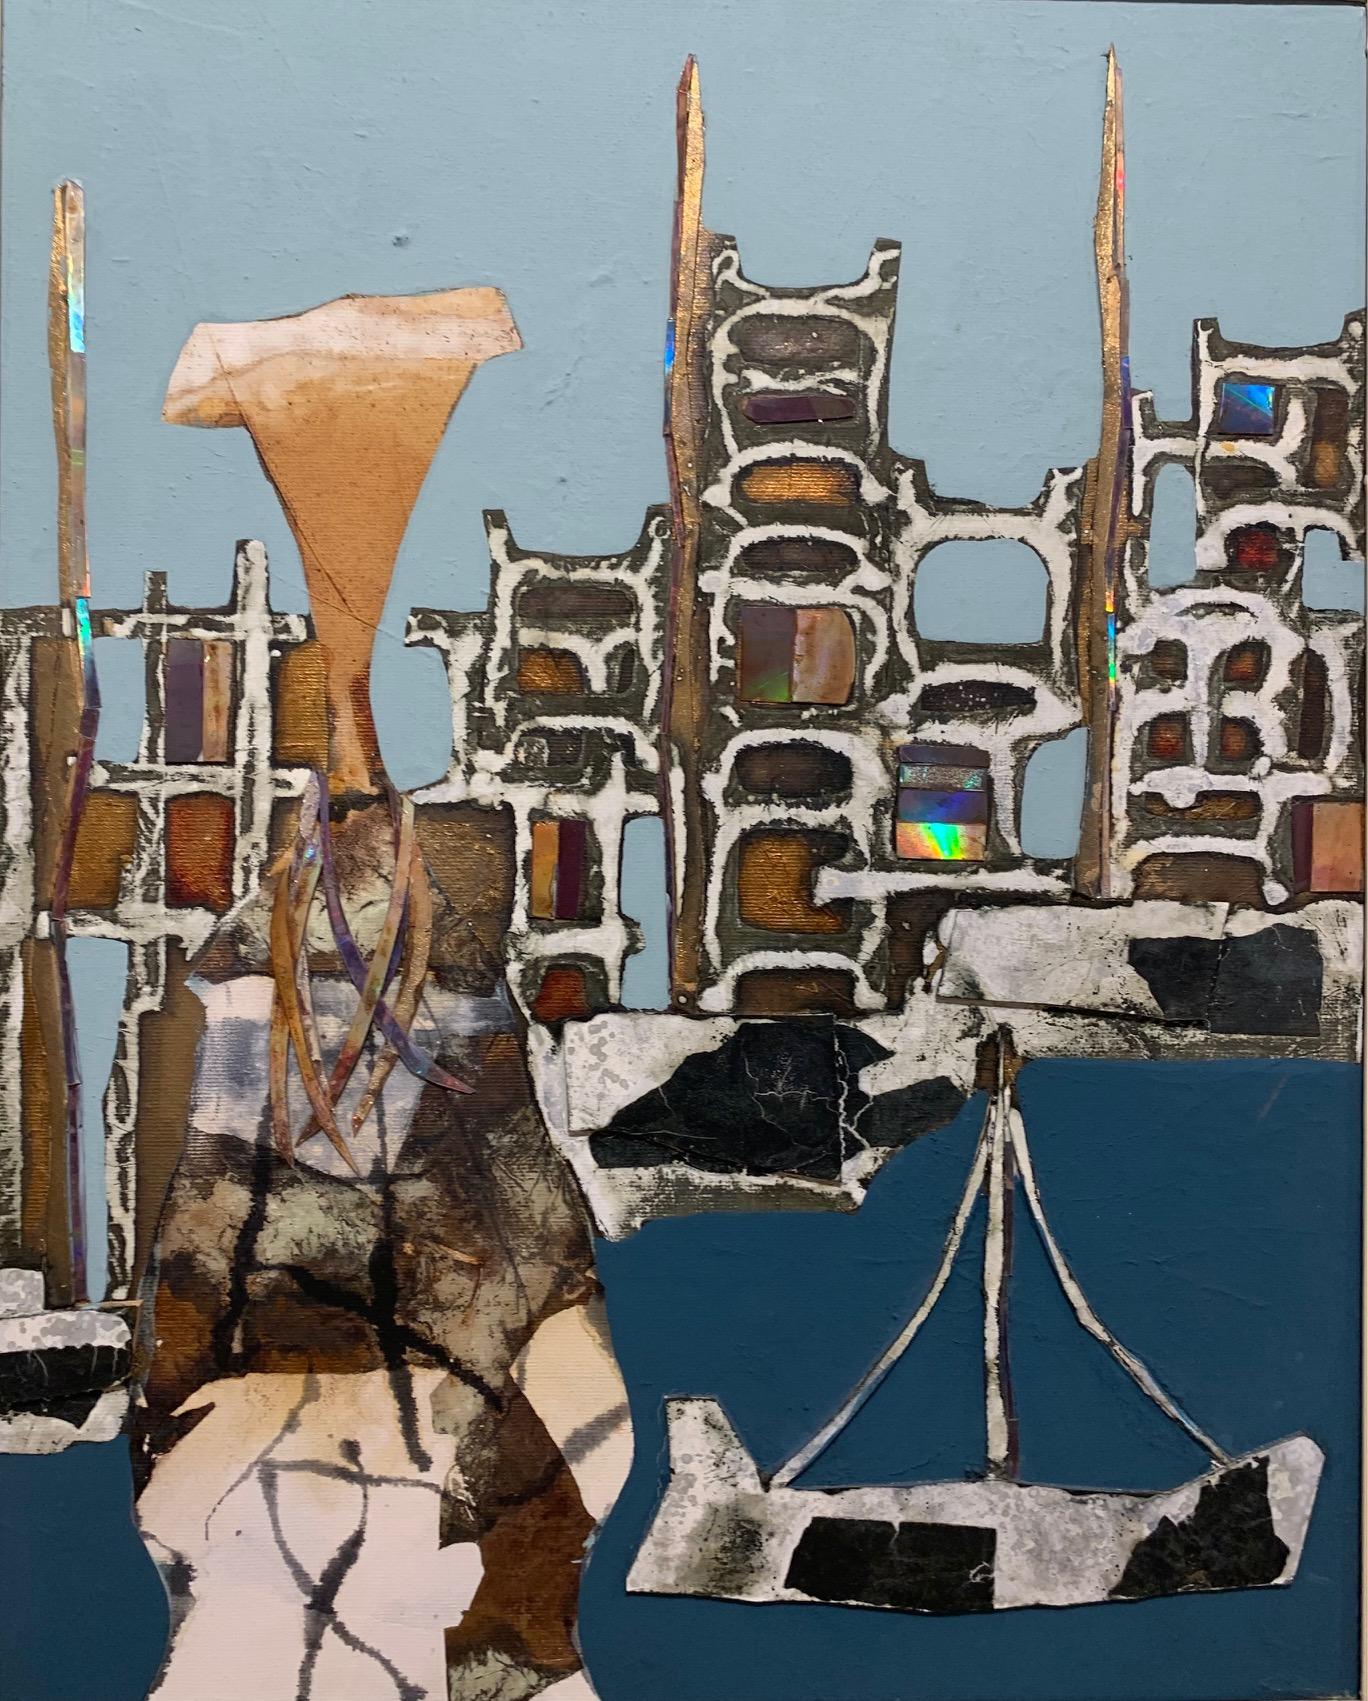 Fishermans Wife -Andrea Stella-Figurative Abstract Painting-Mixed Media - Mixed Media Art by ANDREA STELLA